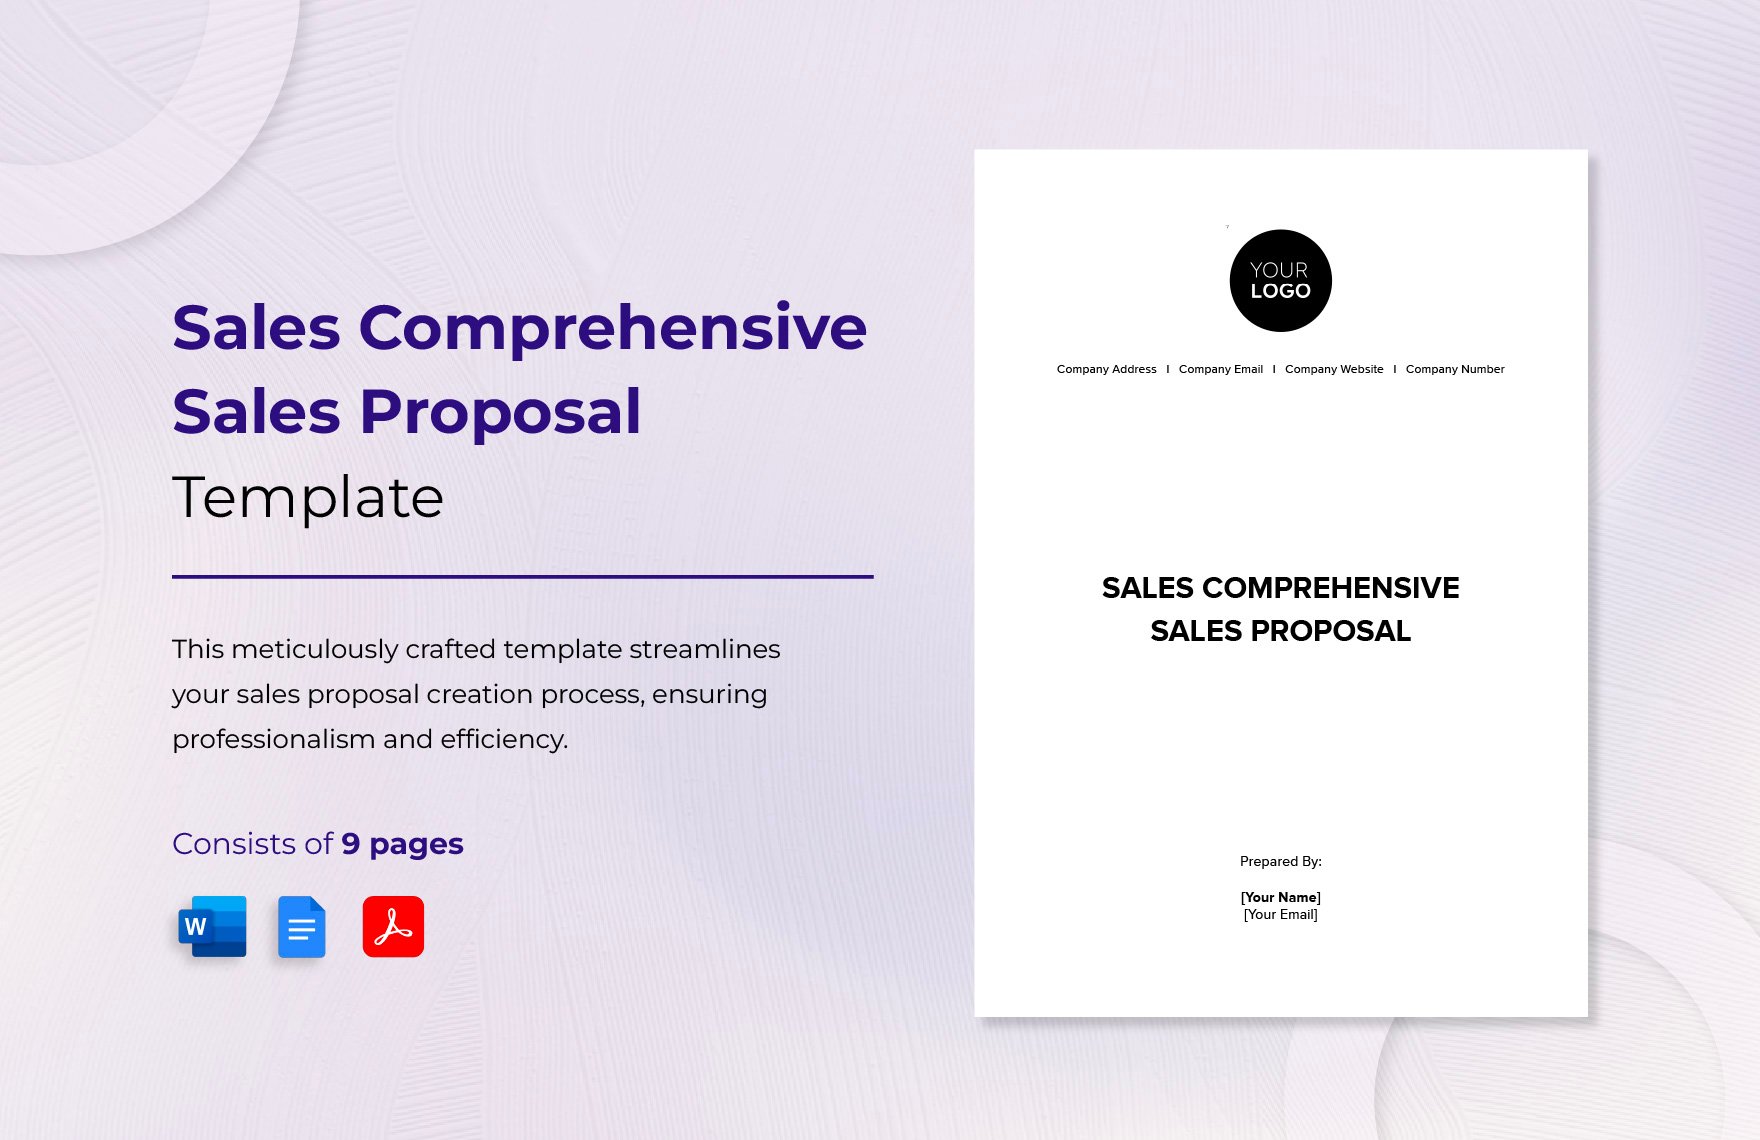 Sales Comprehensive Sales Proposal Template